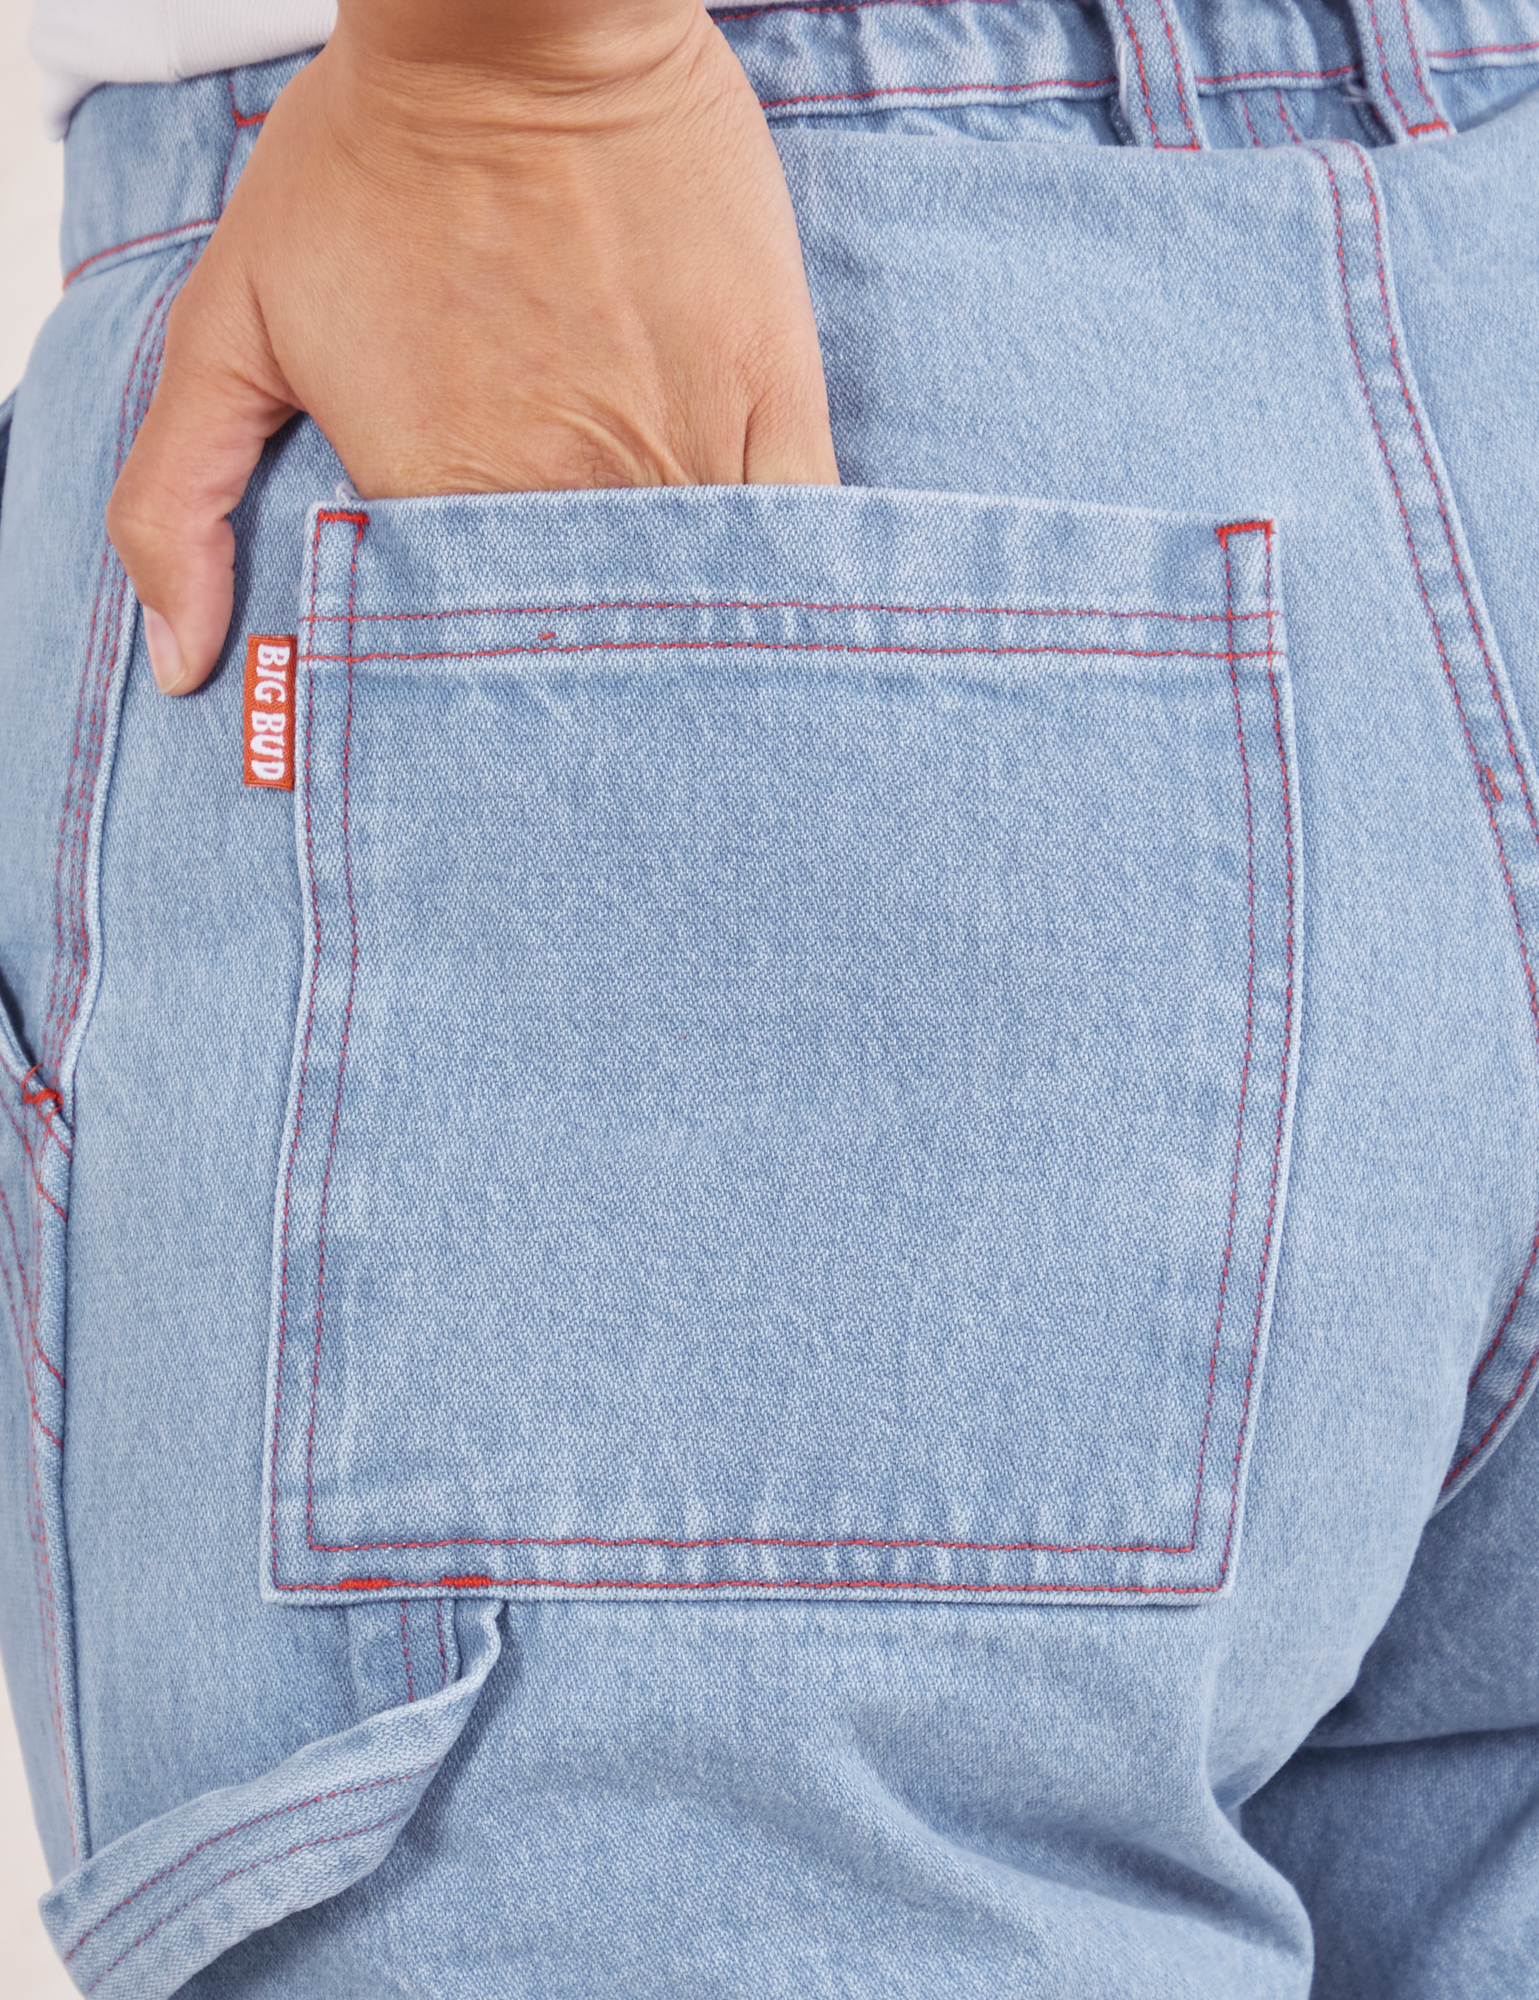 Carpenter Jeans!!! – BIG BUD PRESS